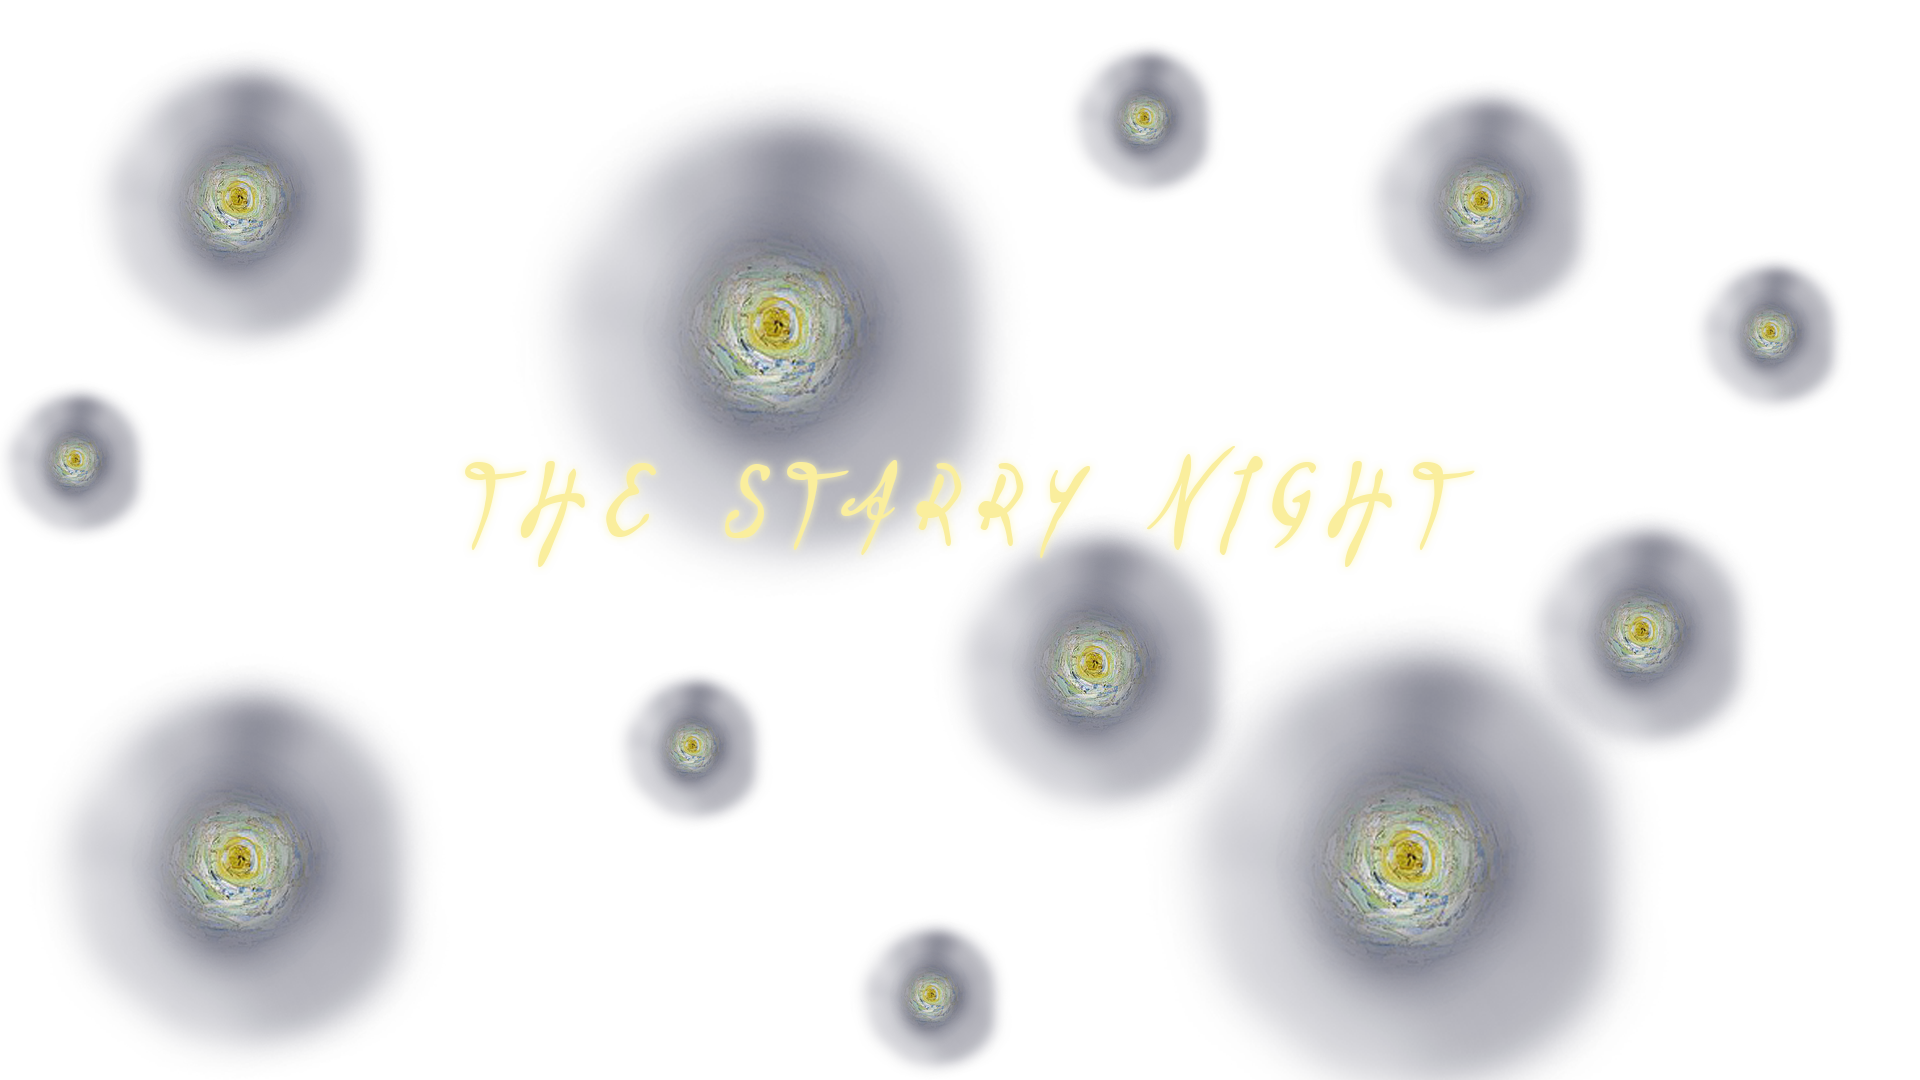 The starry night